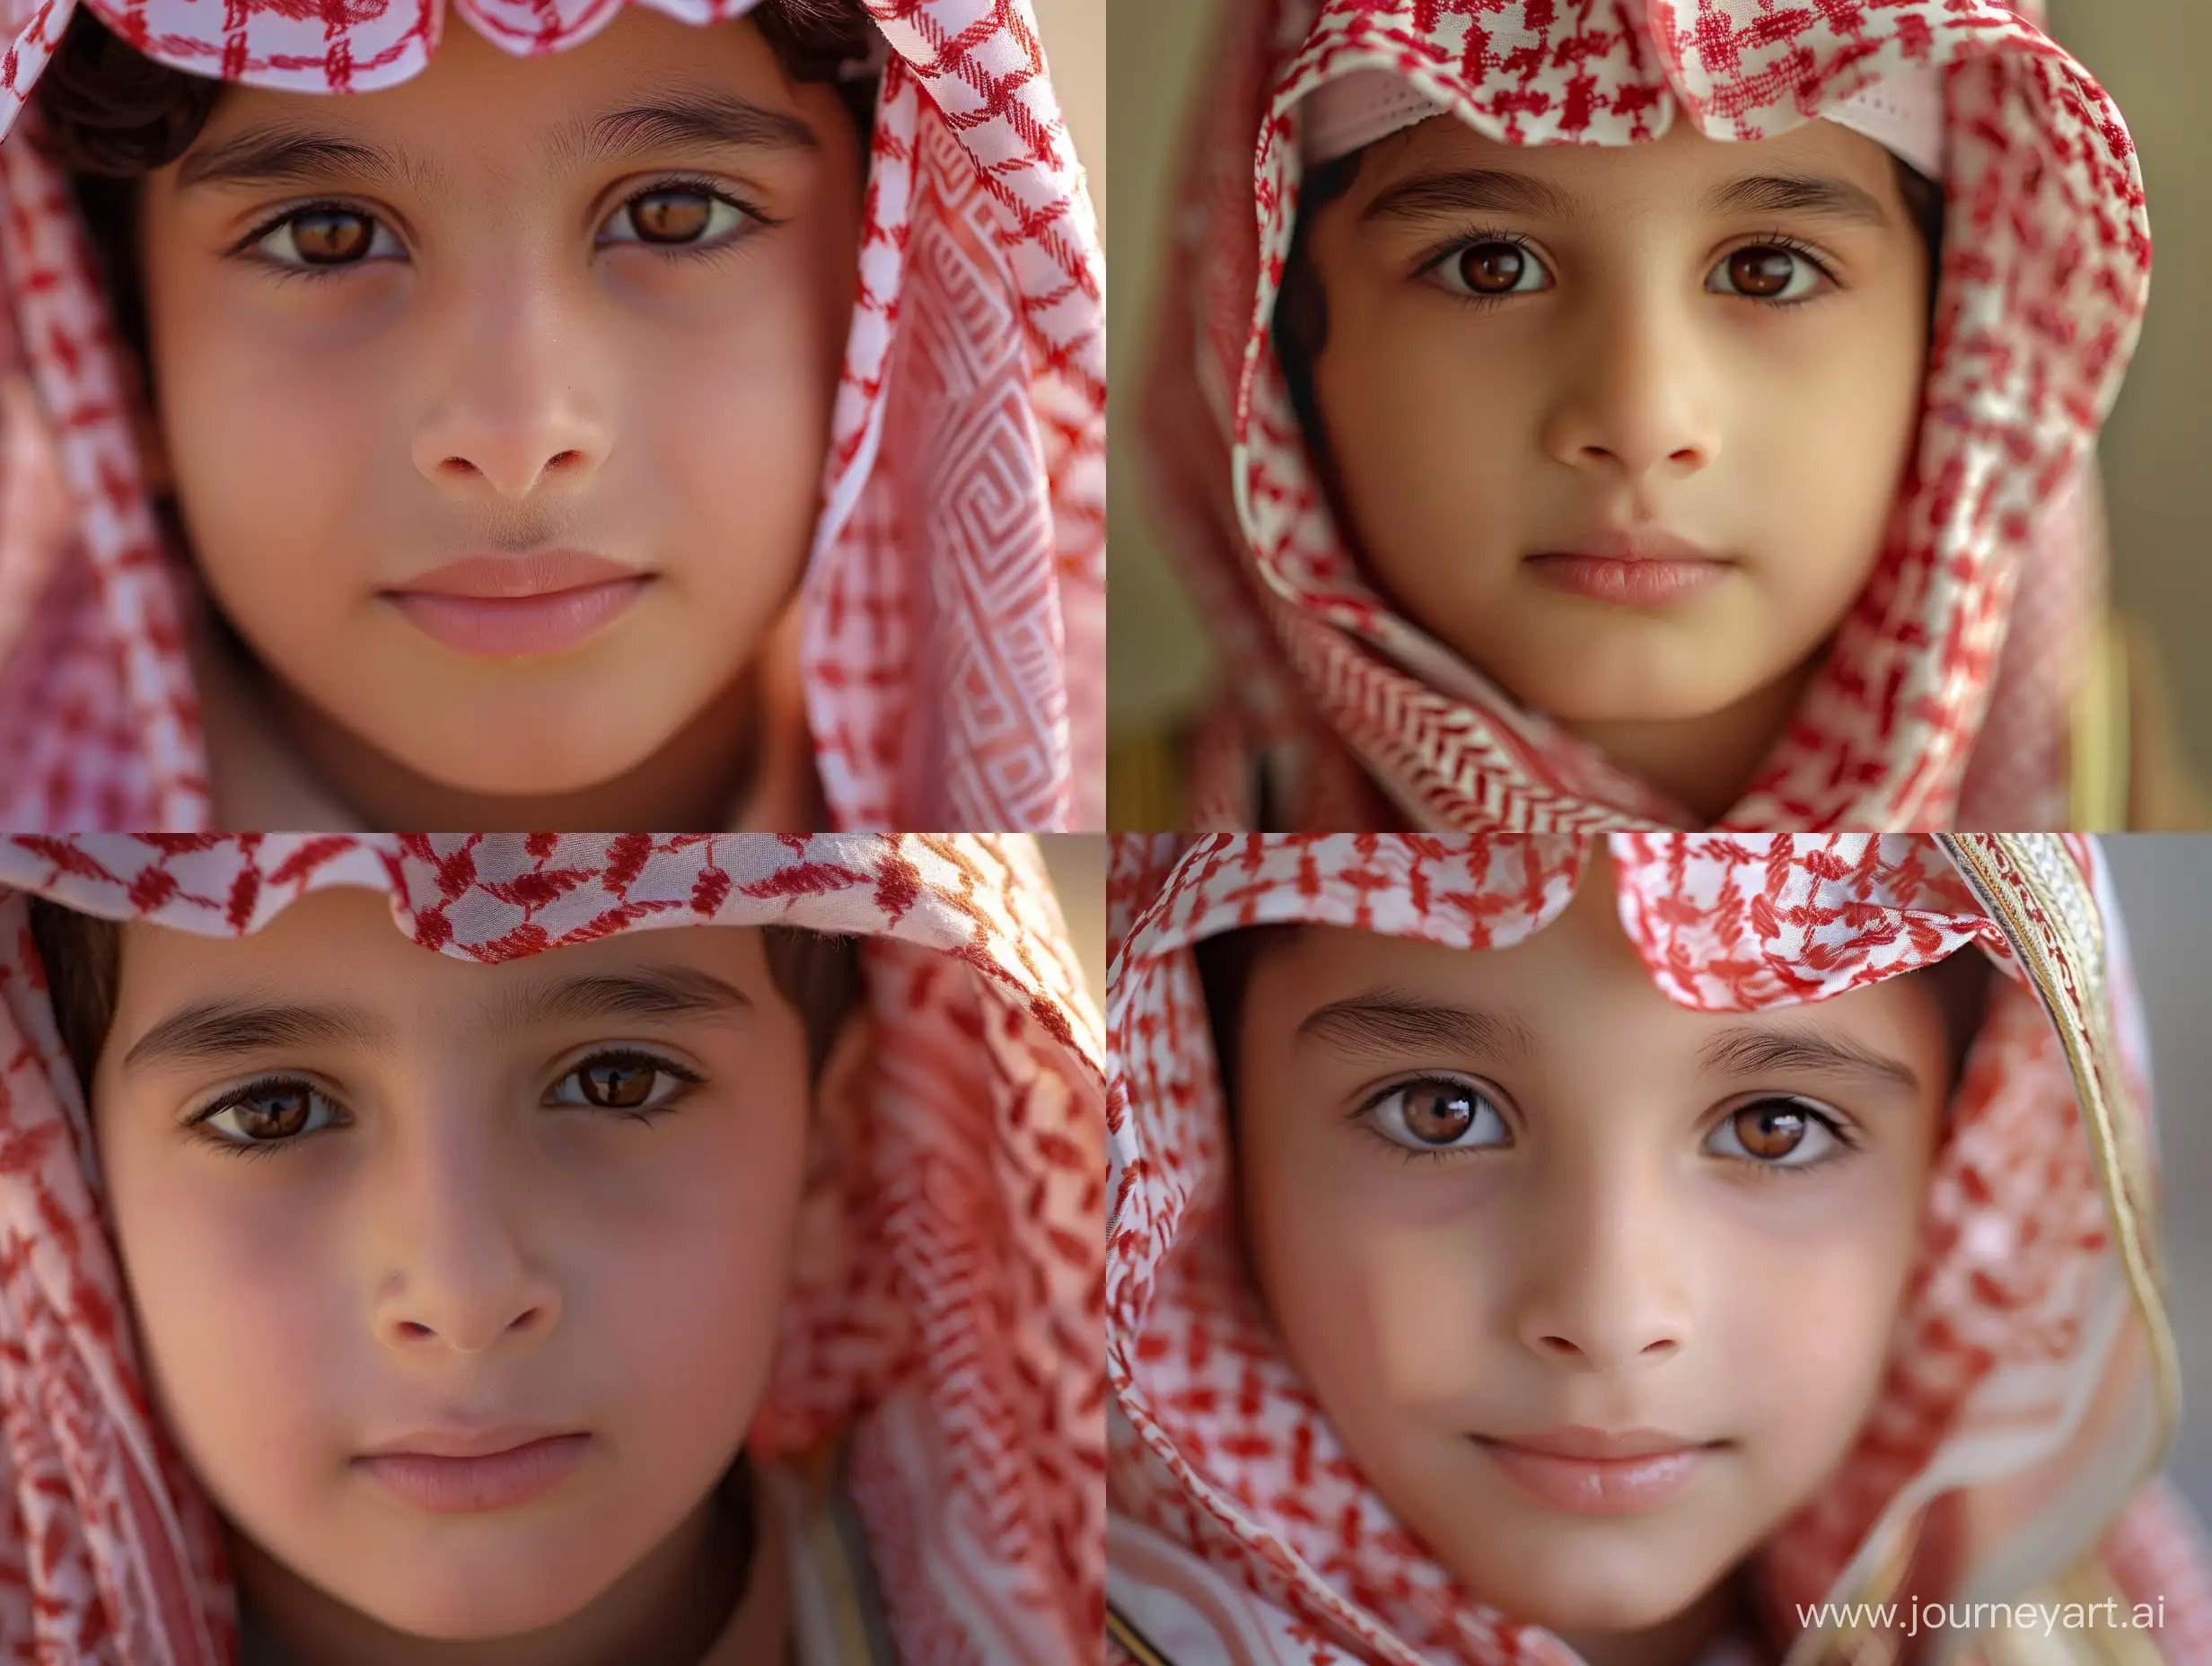 Young-Gulf-Arab-Saudi-Boy-in-Traditional-Costume-Celebrating-Saudi-Arabias-Founding-Day